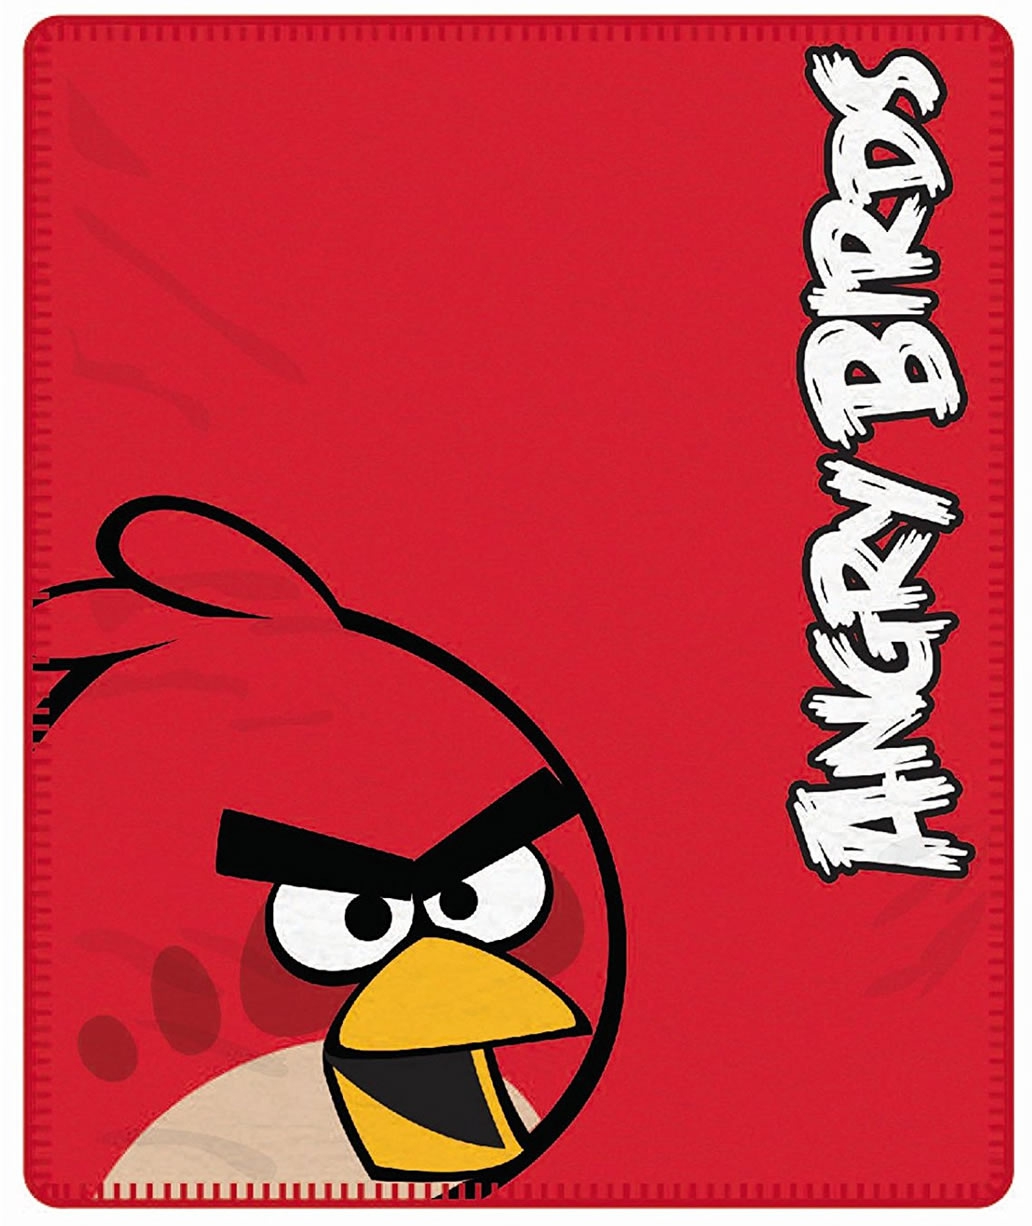 Angry Birds Red Panel Fleece Blanket Throw Bubblebedding Online Store